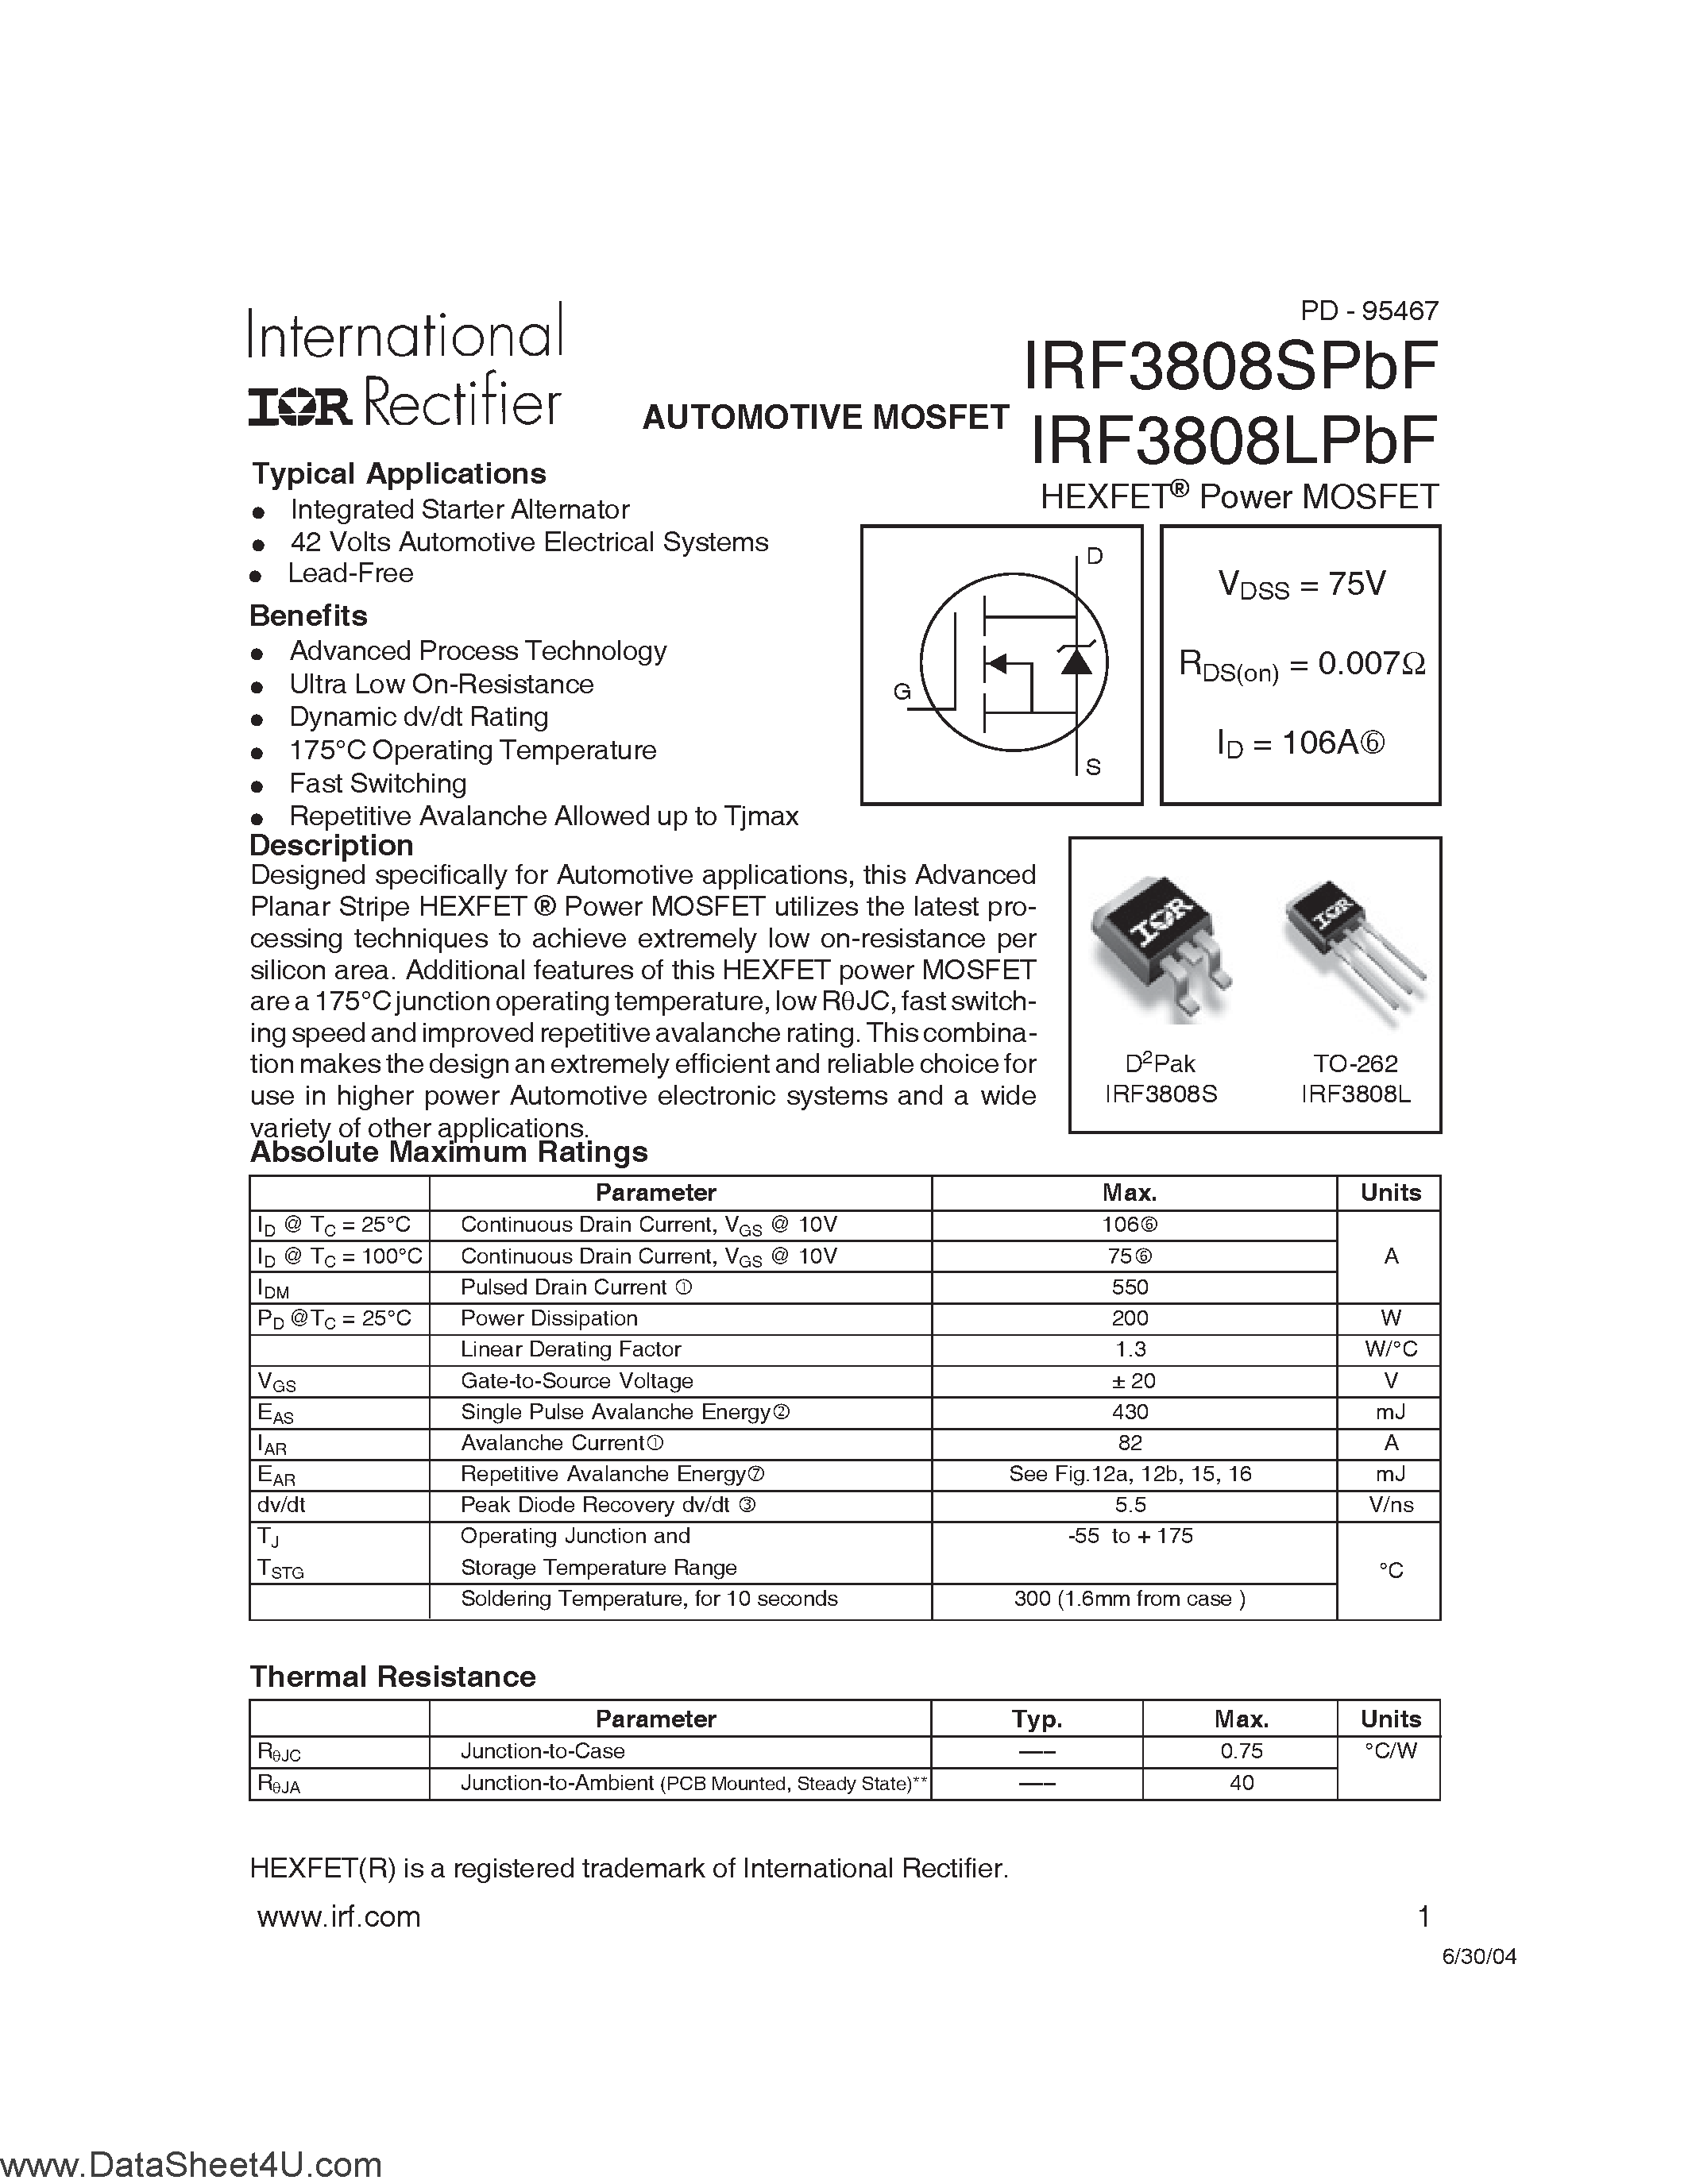 Даташит IRF3808LPBF - (IRF3808SPBF / IRF3808LPBF) AUTOMOTIVE MOSFET страница 1